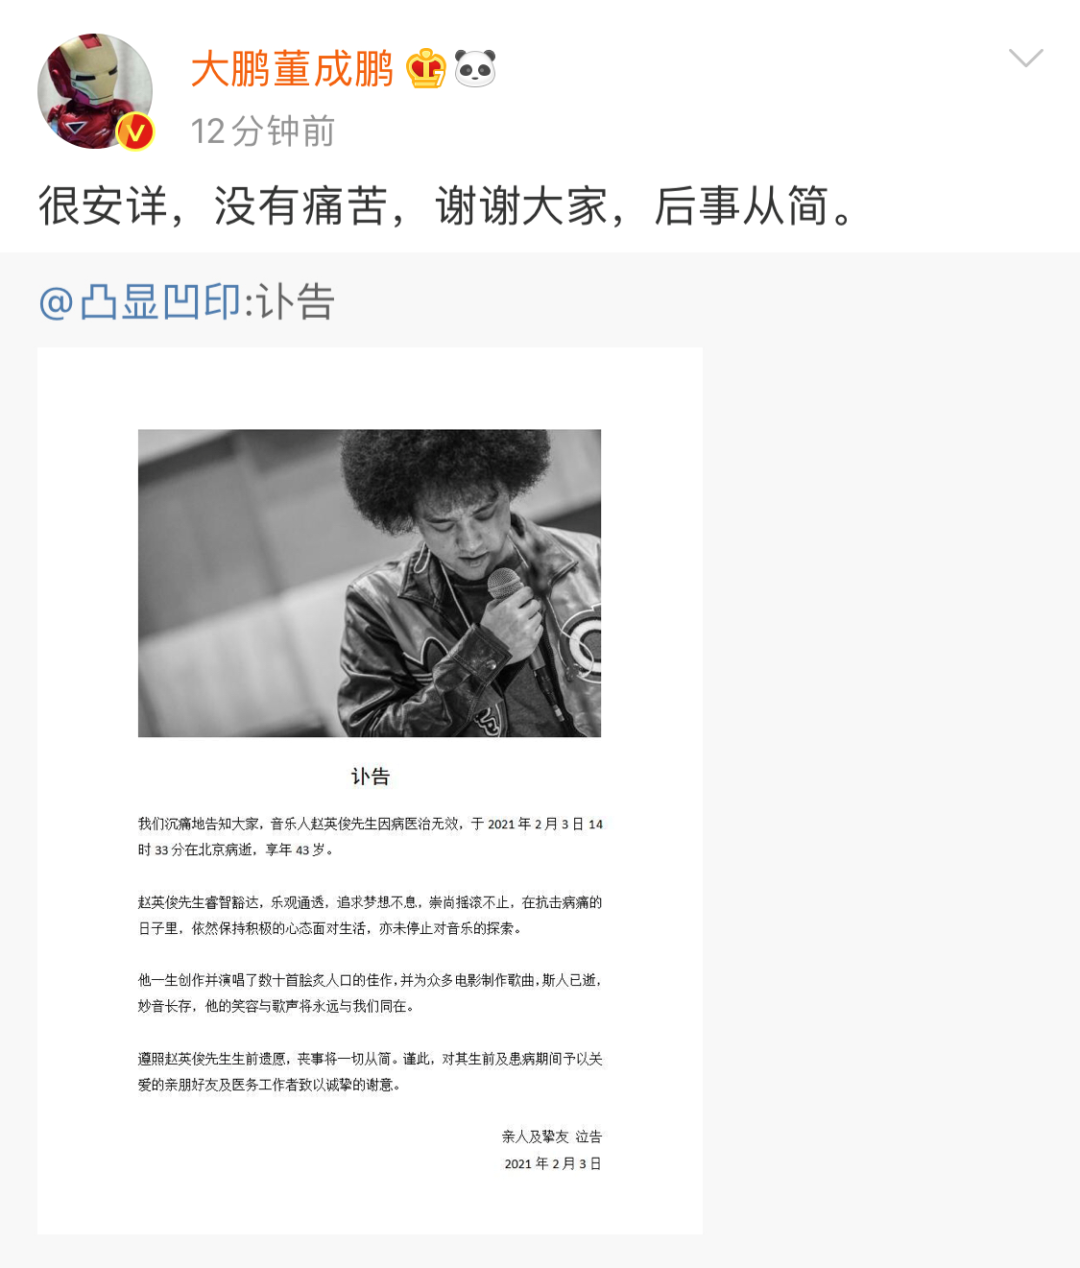 play2月3日, 知名歌手赵英俊的亲友发布讣告,宣布赵英俊因病医治无效